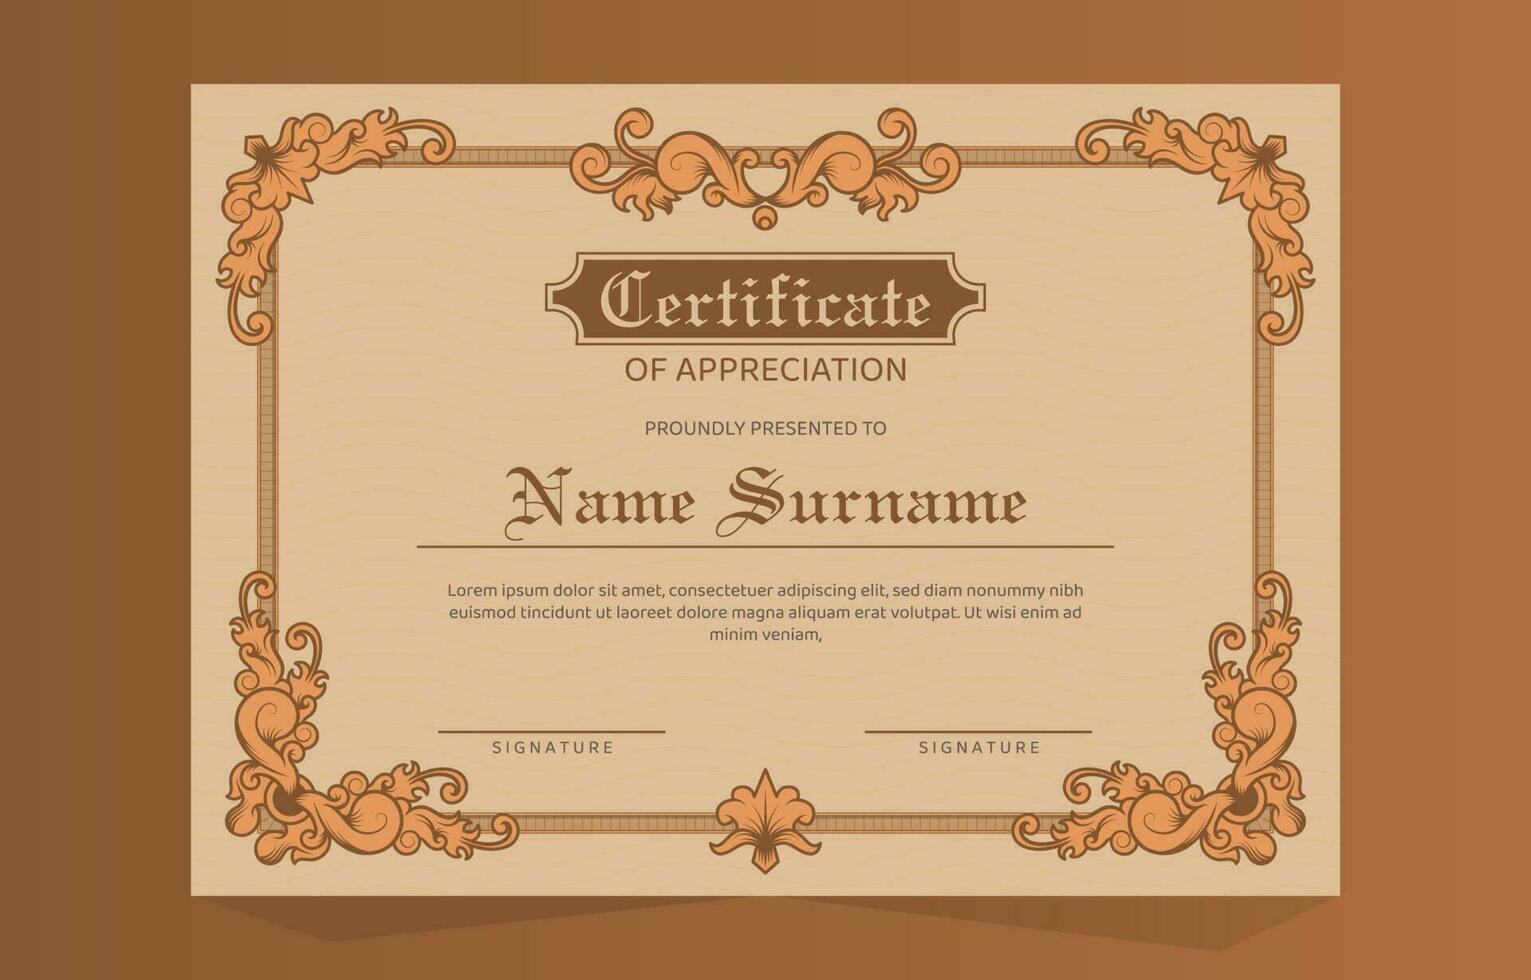 Victorian Classic Certificate Template vector